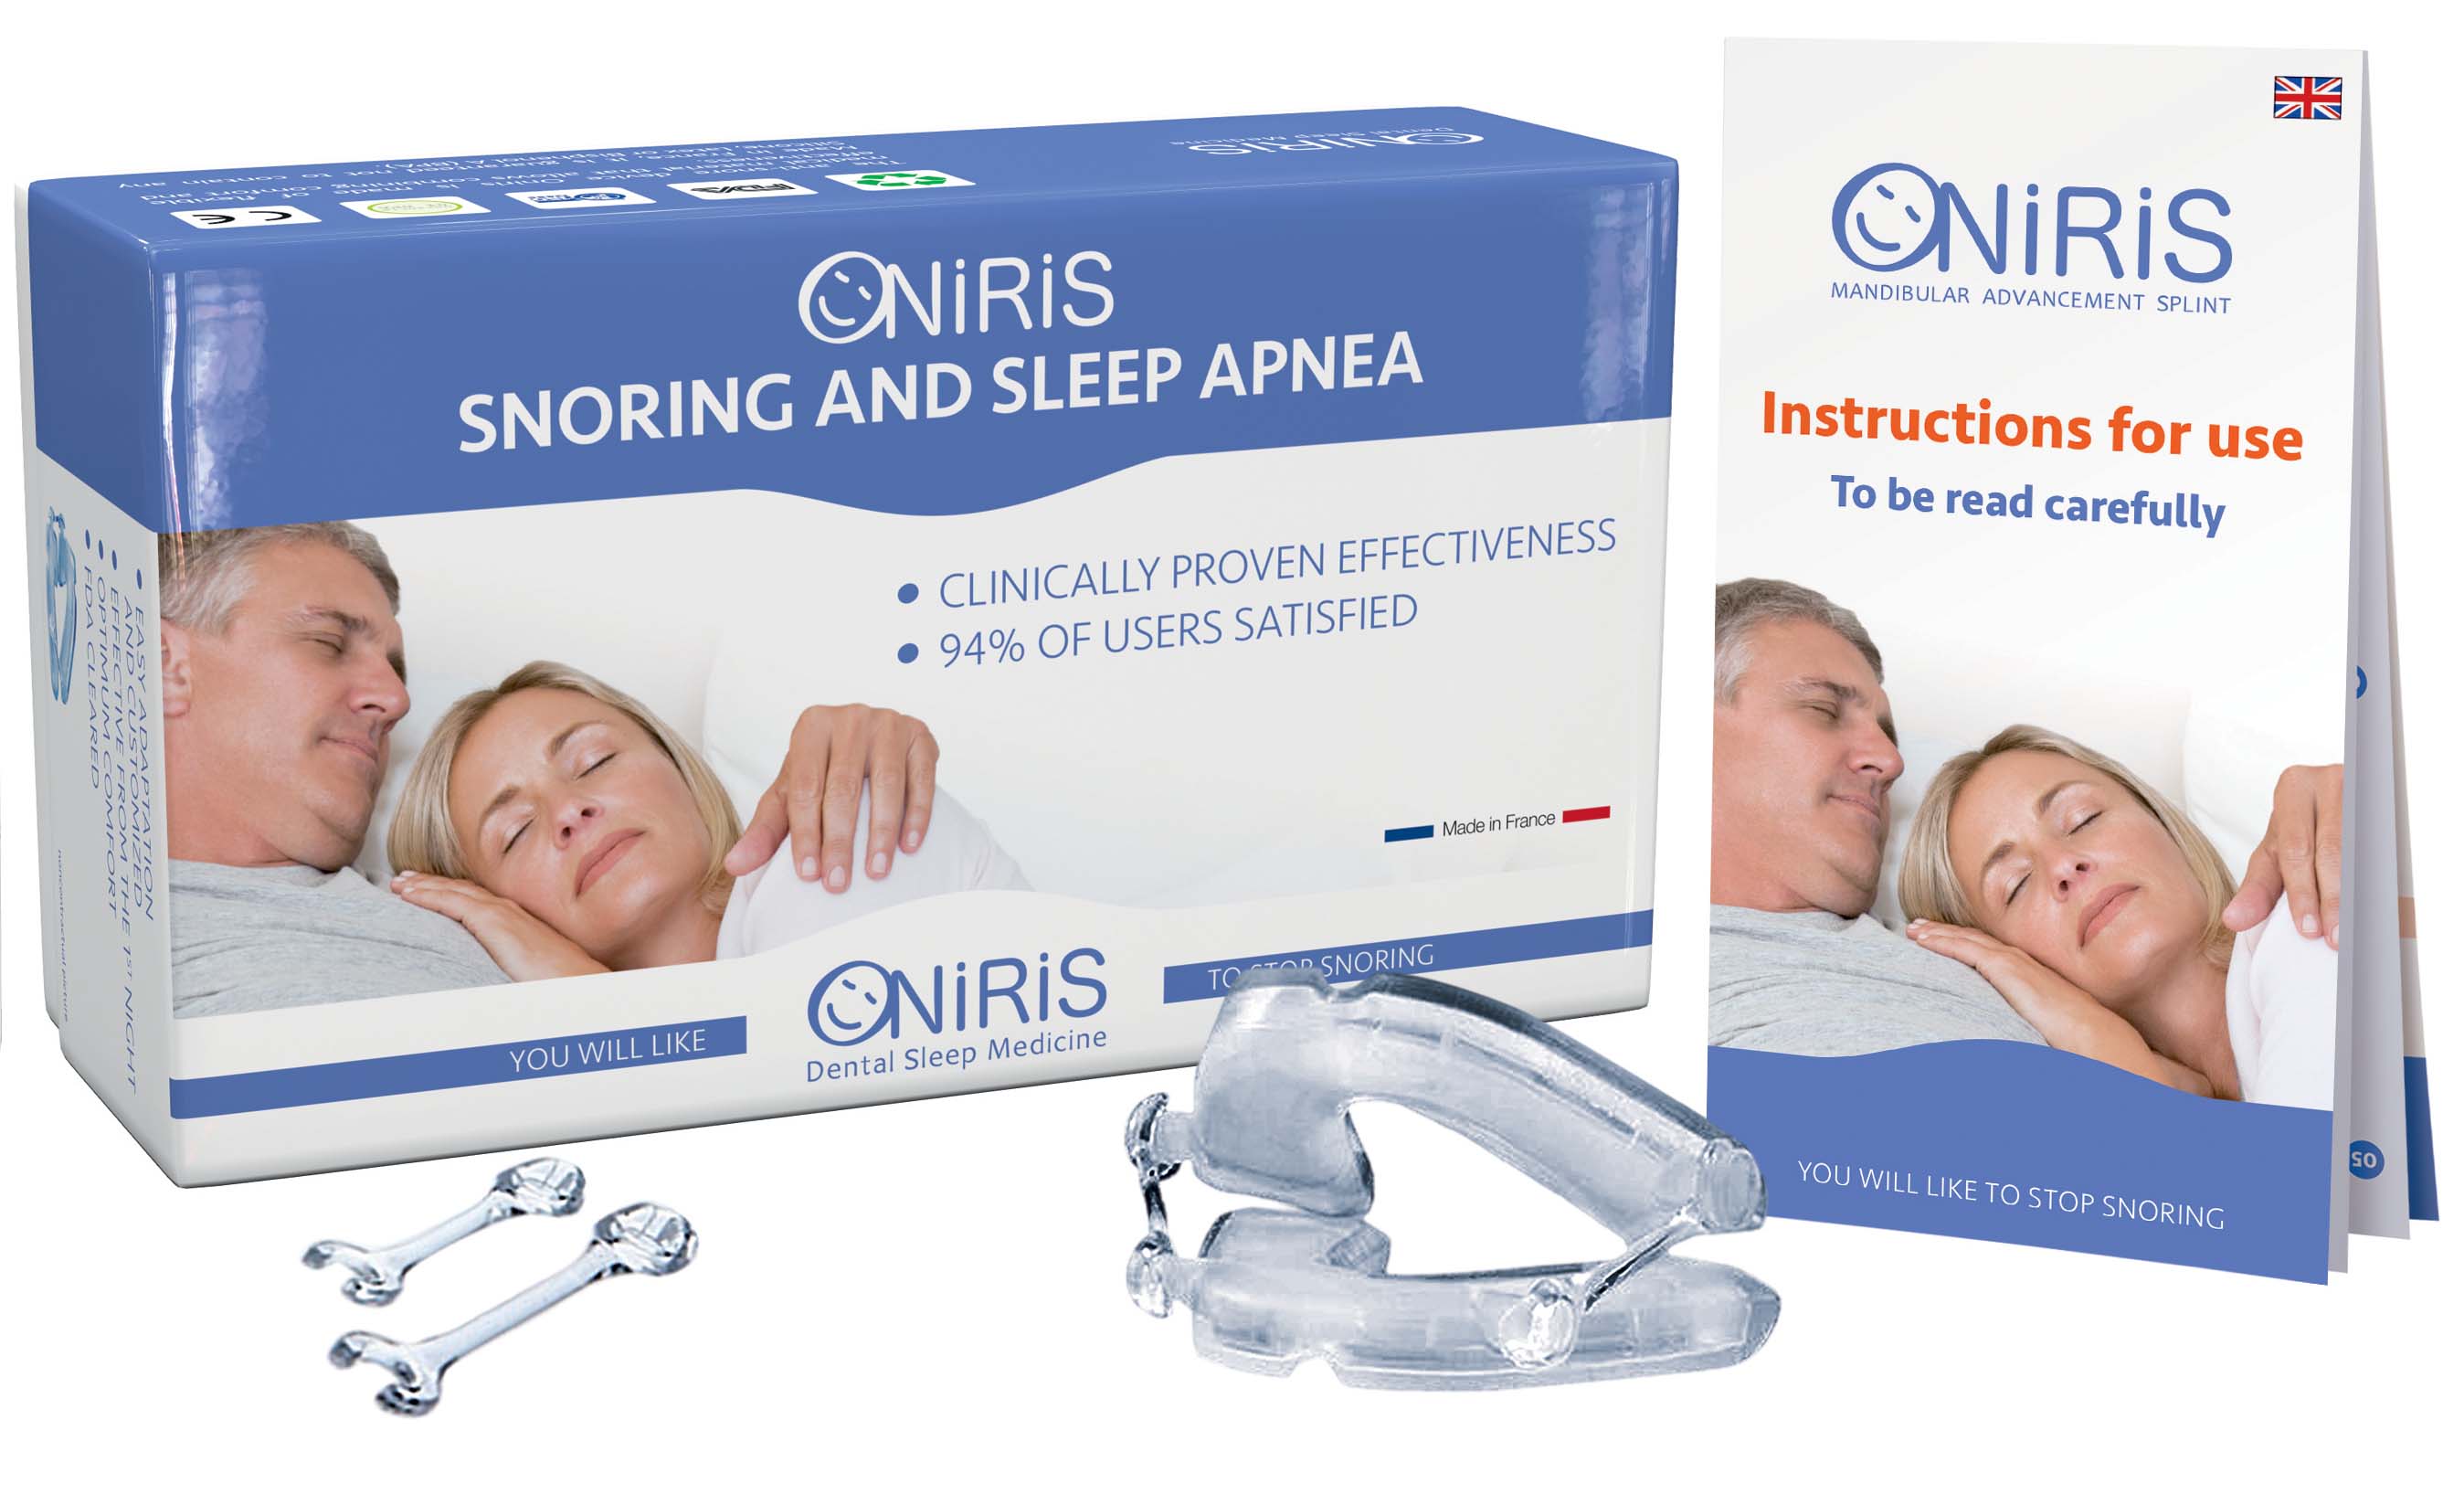 Oniris anti-snoring device